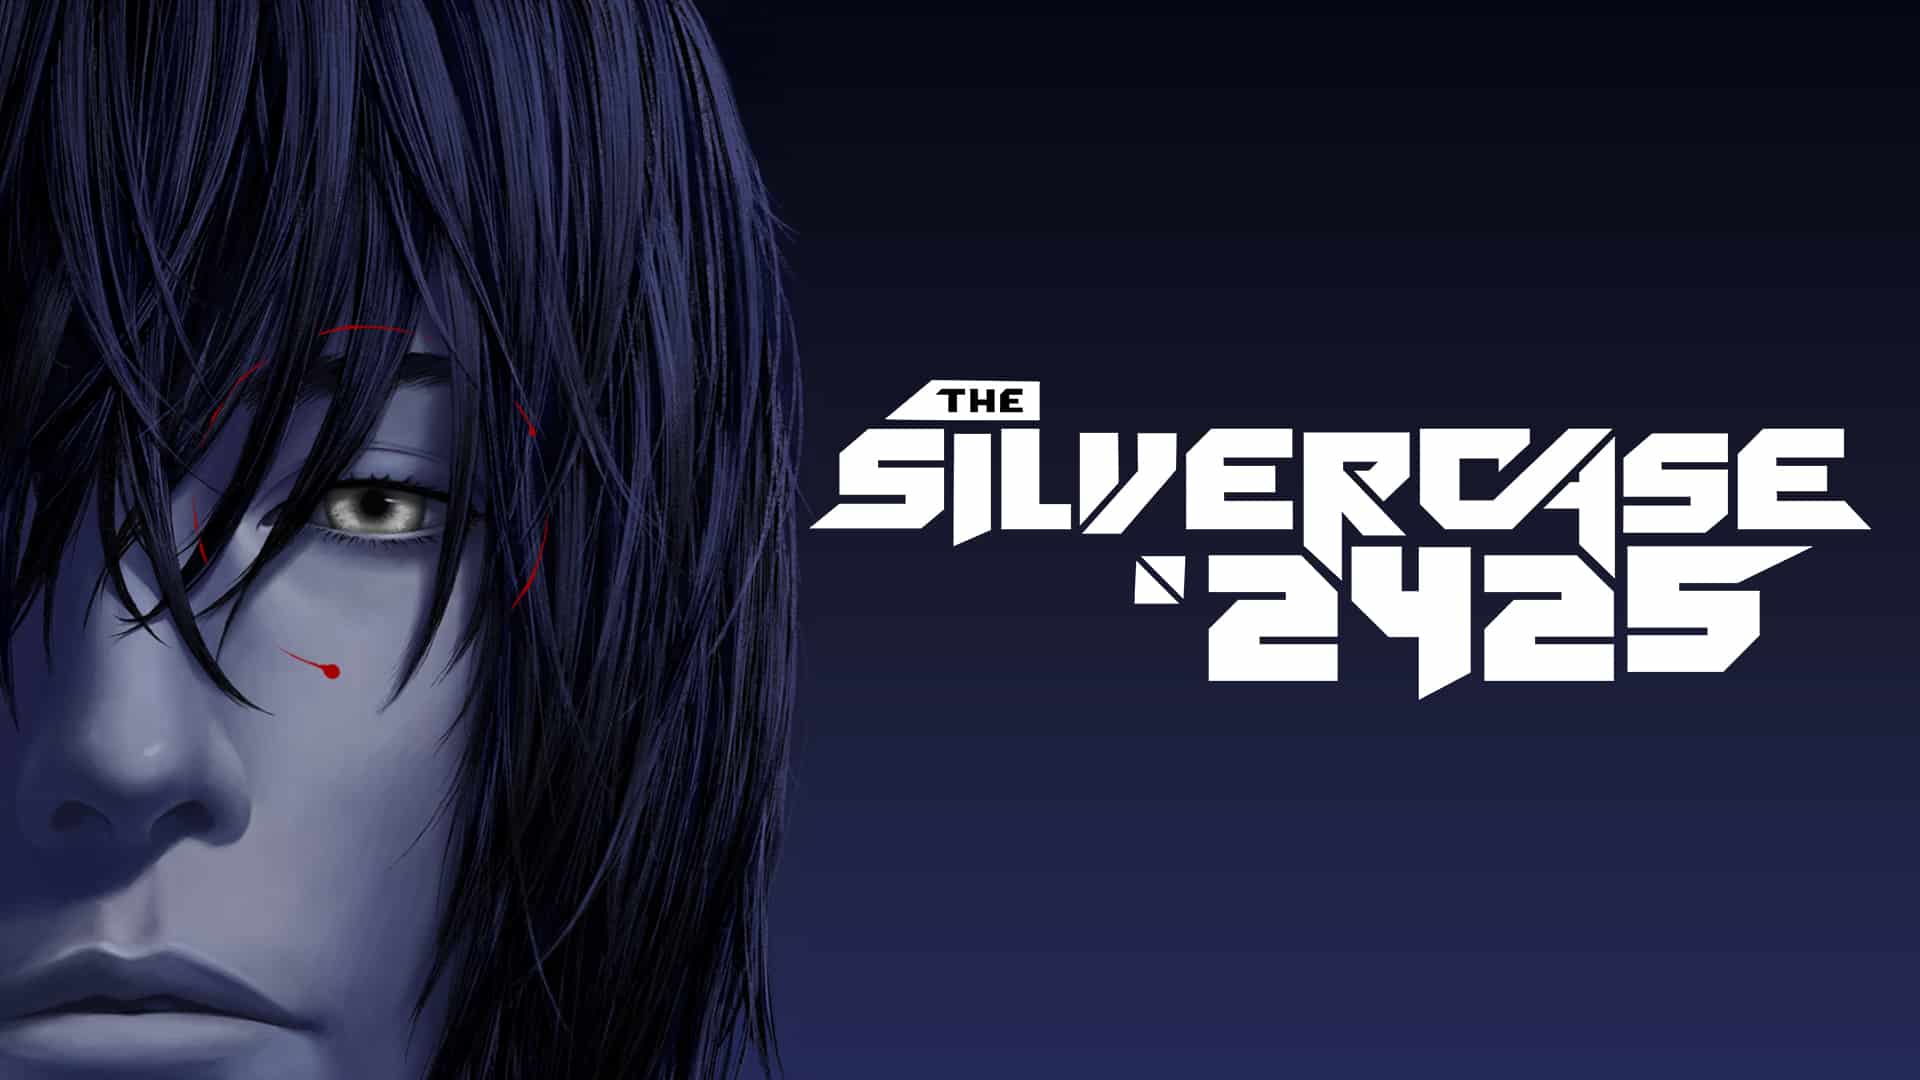 the silver case 2425 cover